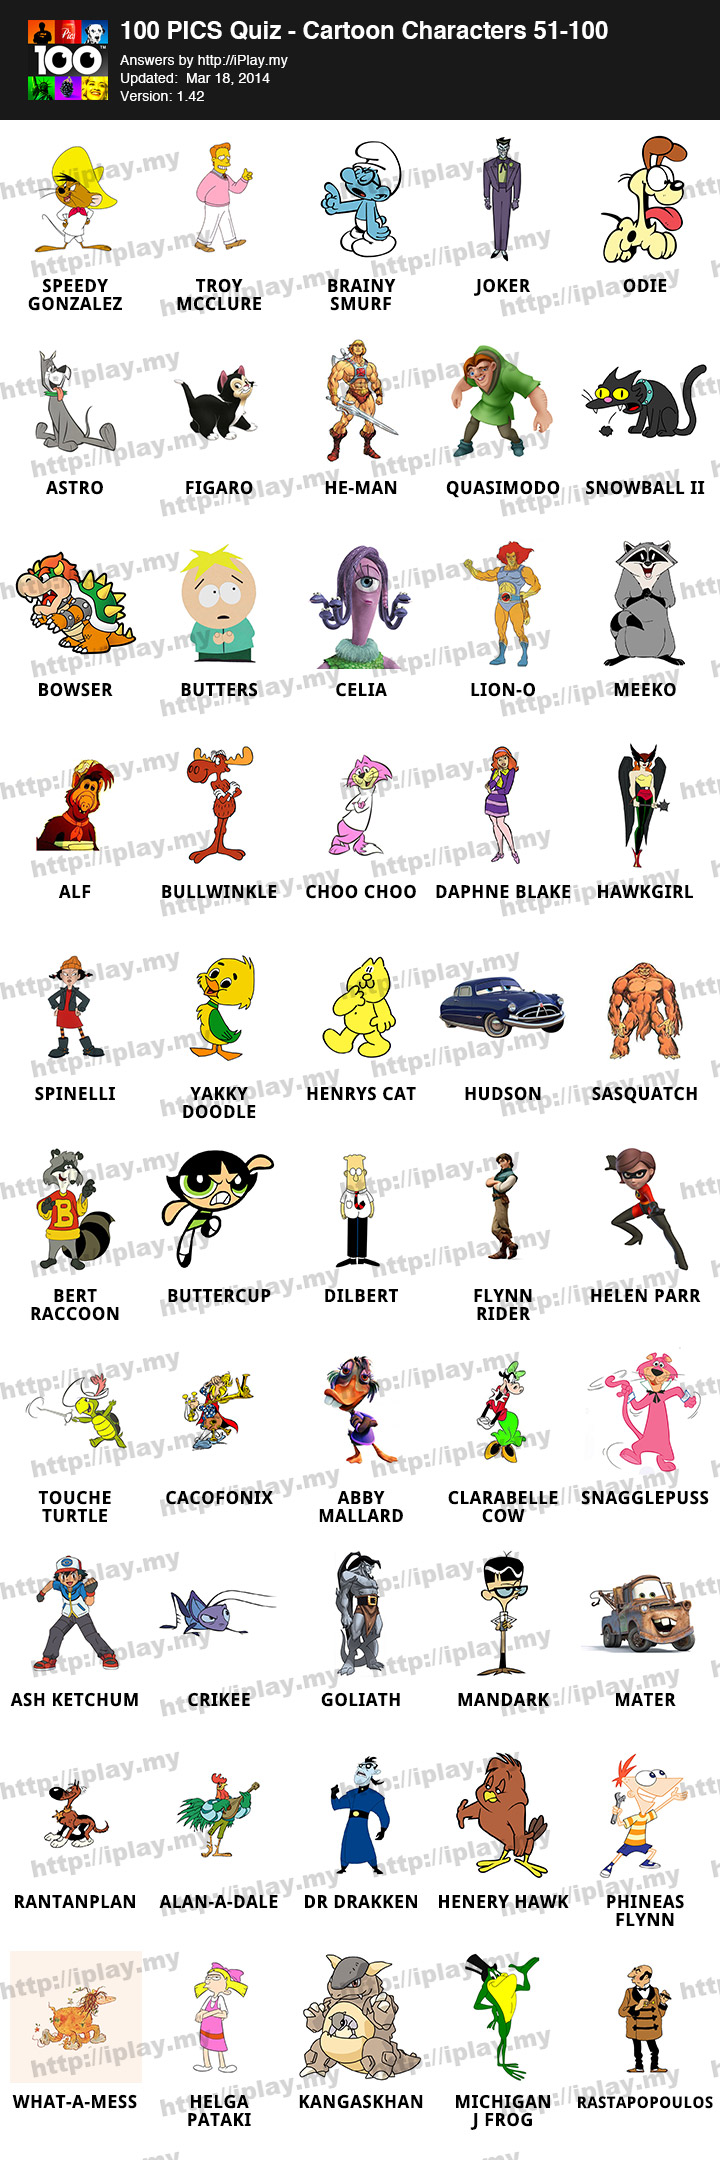 100-Pics-Quiz-Cartoon-Characters-Answers-51-100